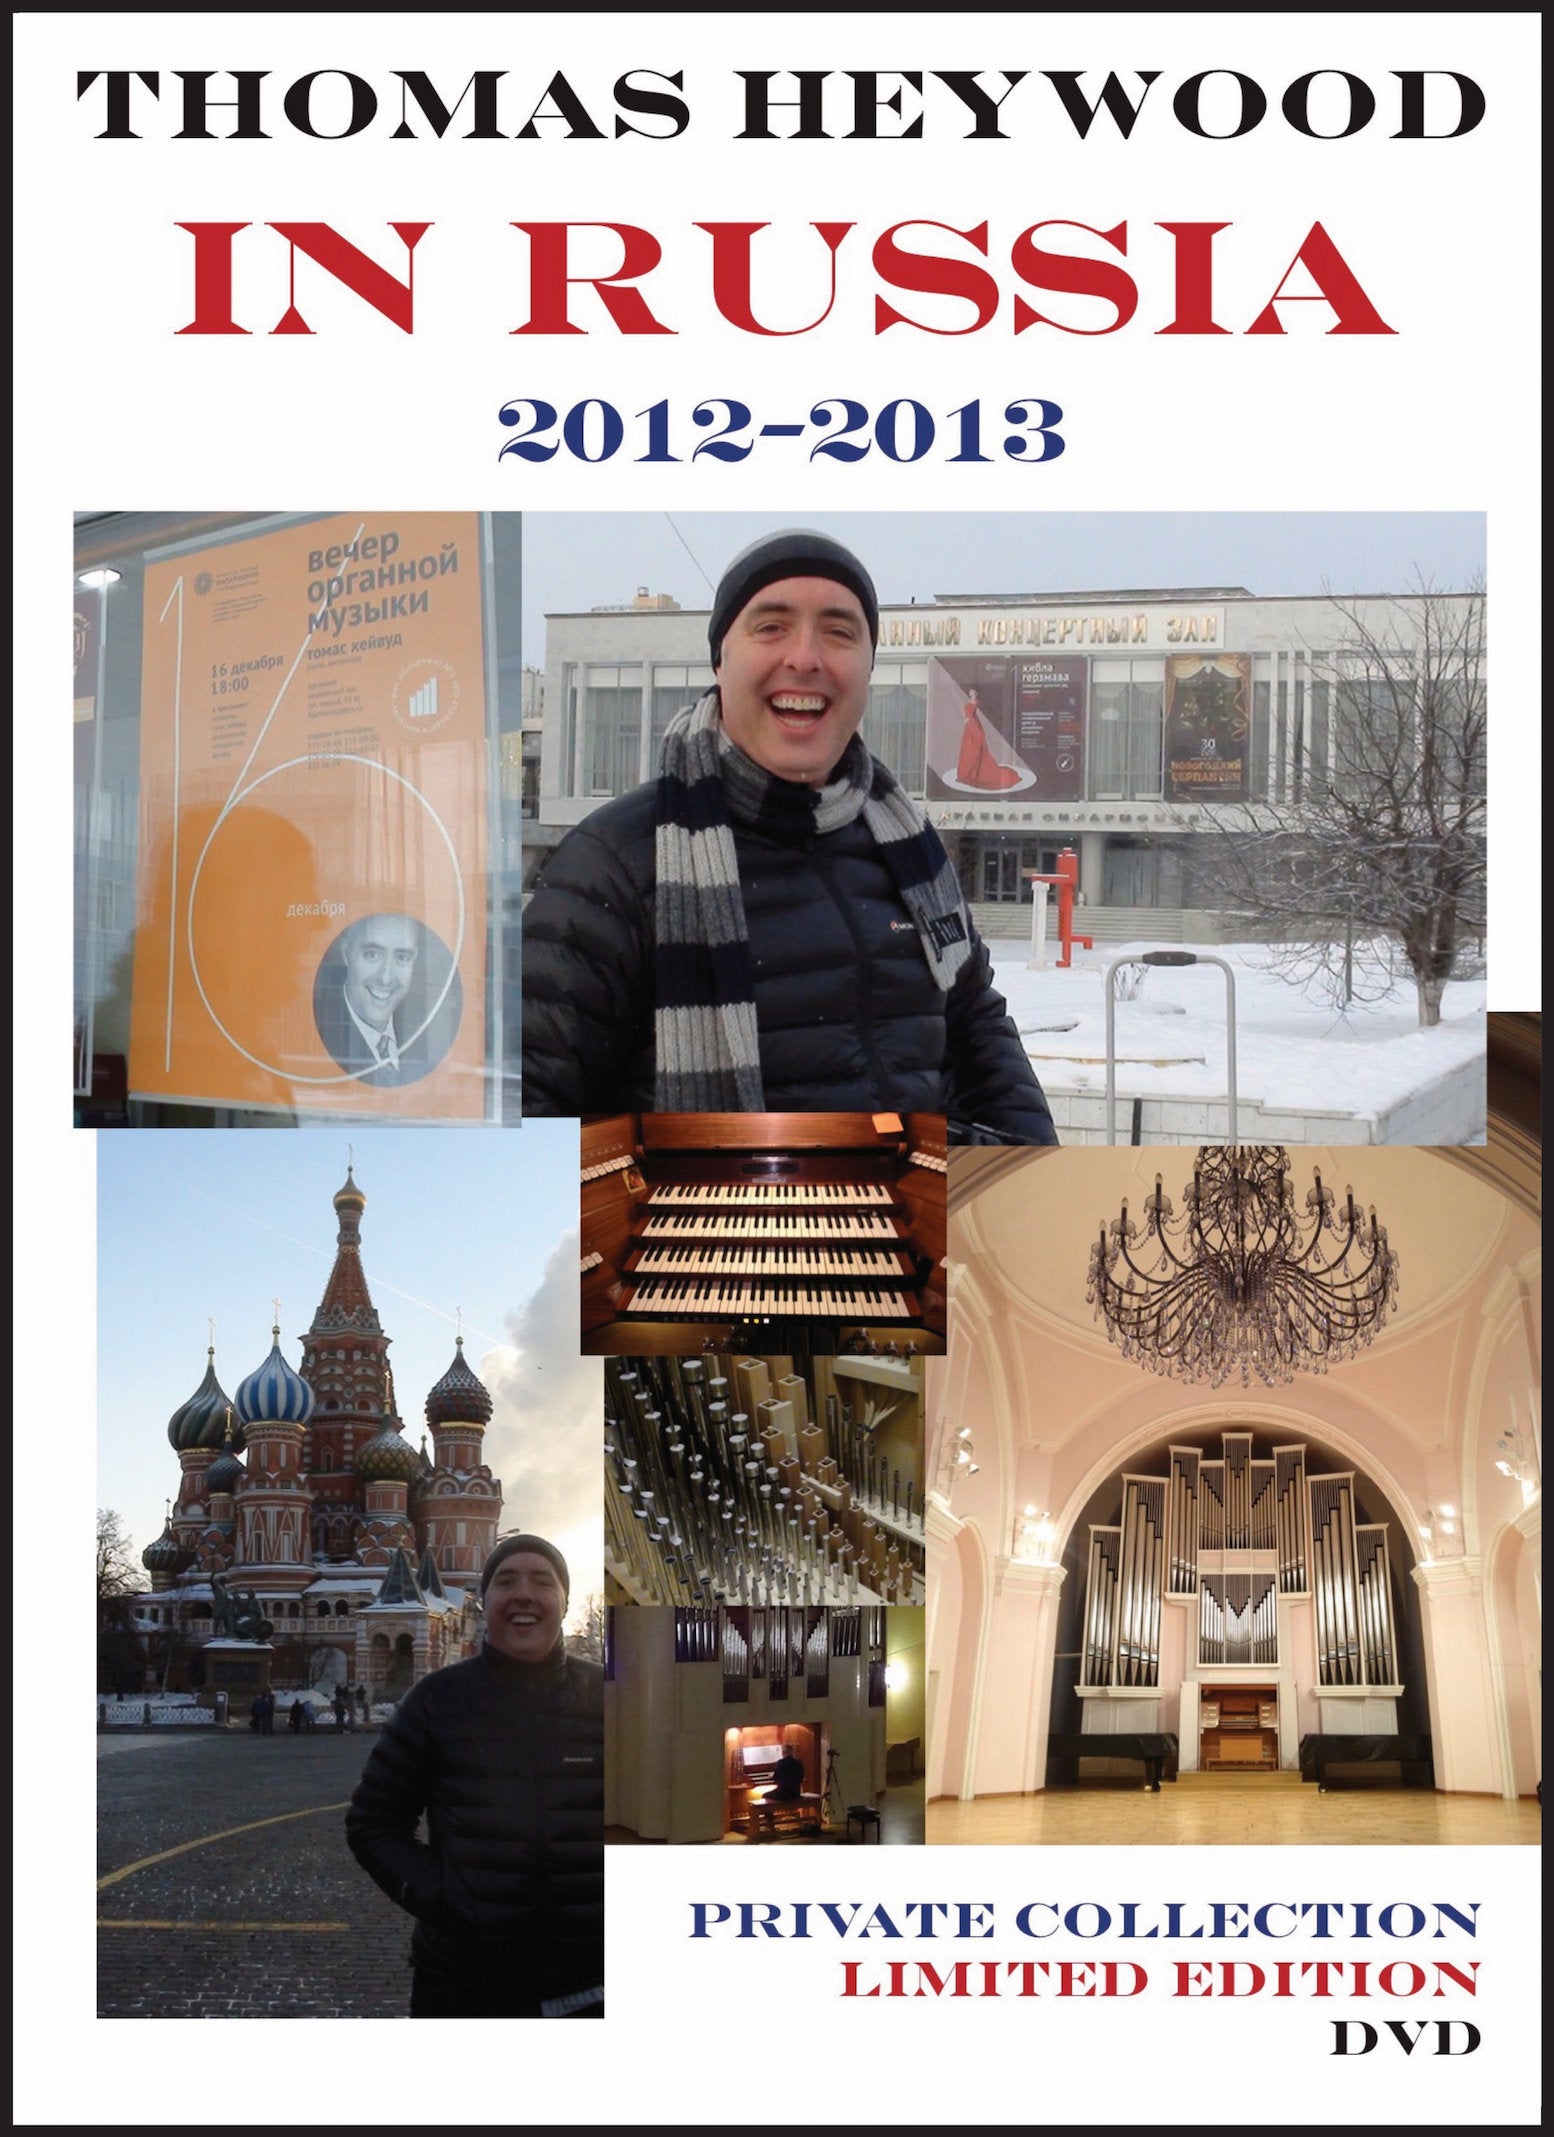 Thomas Heywood in Russia • 2012-2013 (MP4 Film) | Thomas Heywood | Concert Organ International